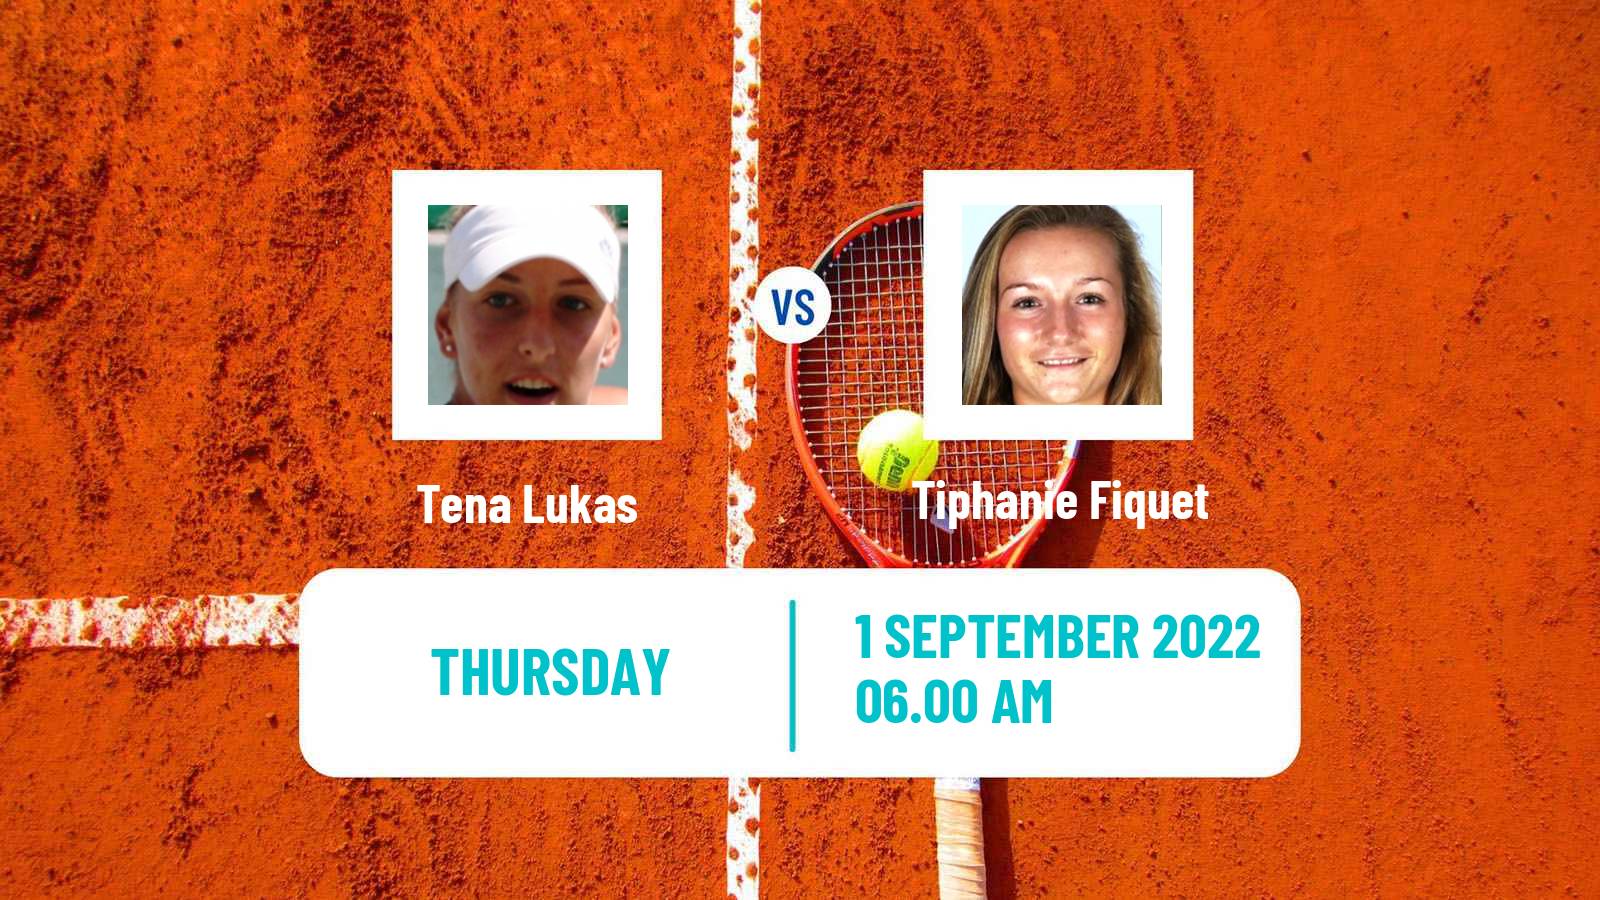 Tennis ITF Tournaments Tena Lukas - Tiphanie Fiquet